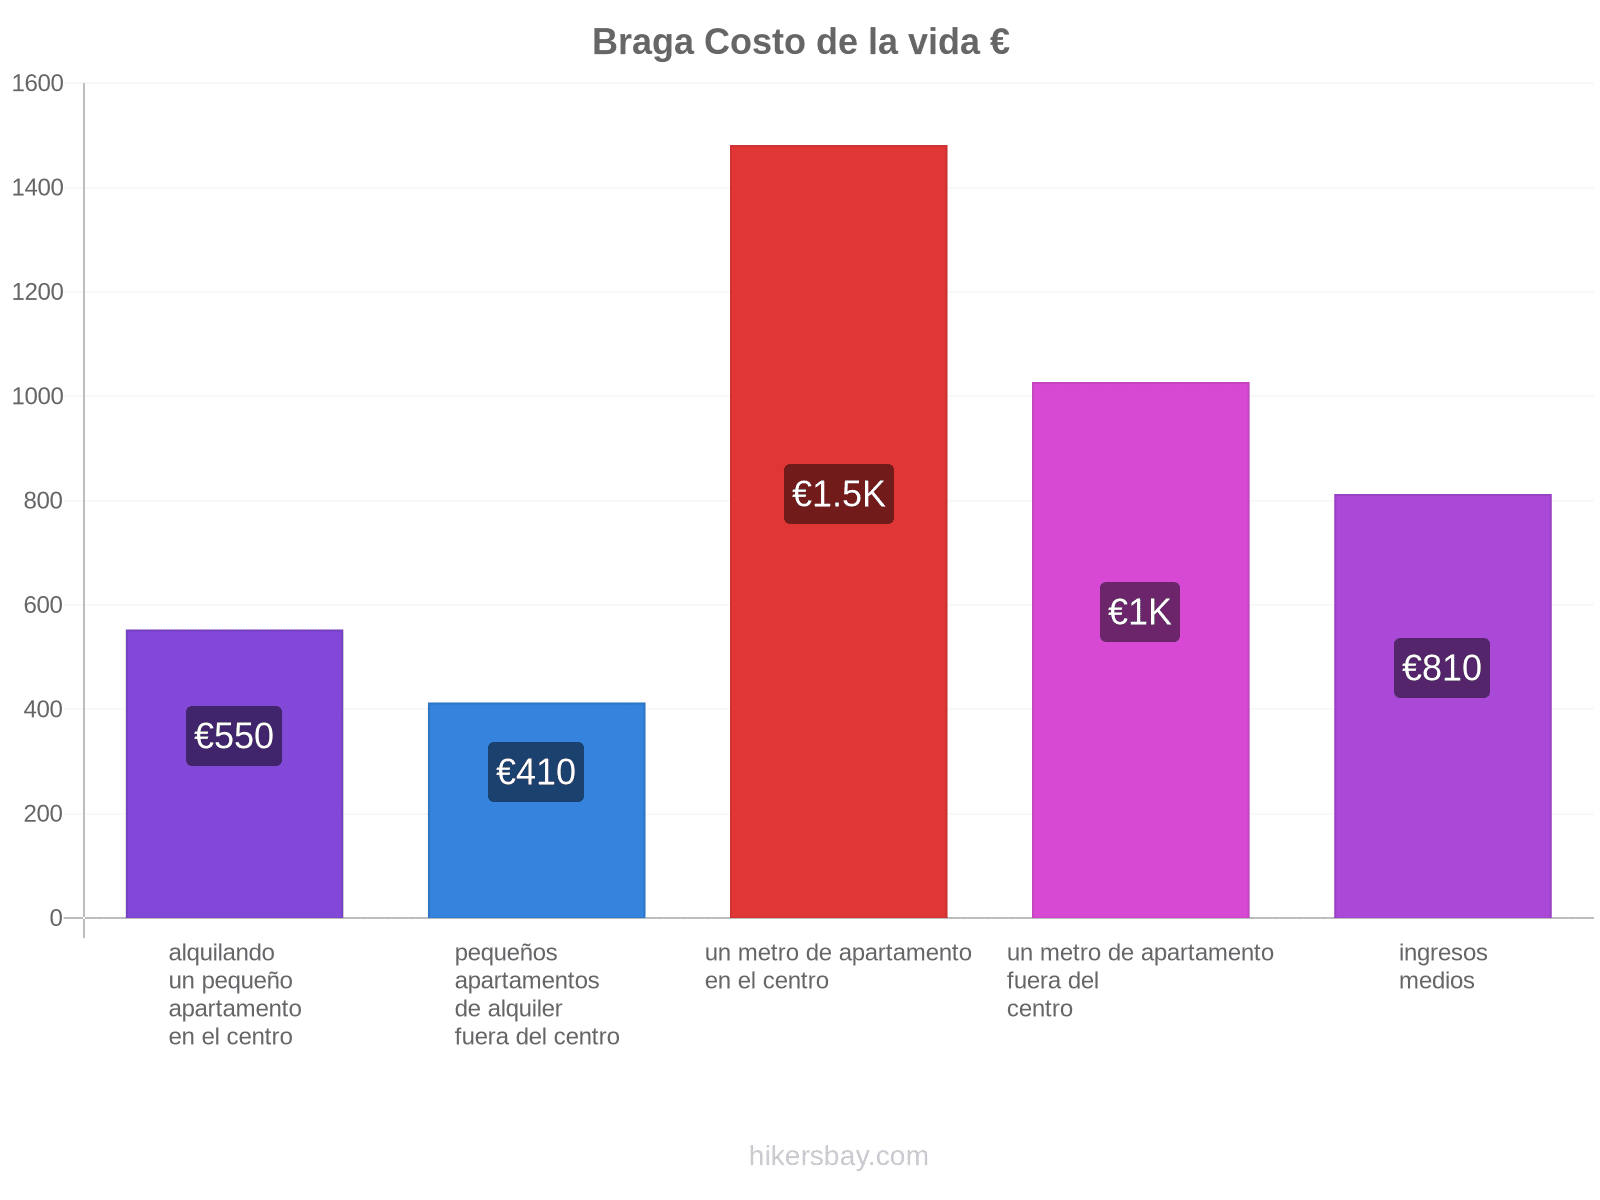 Braga costo de la vida hikersbay.com